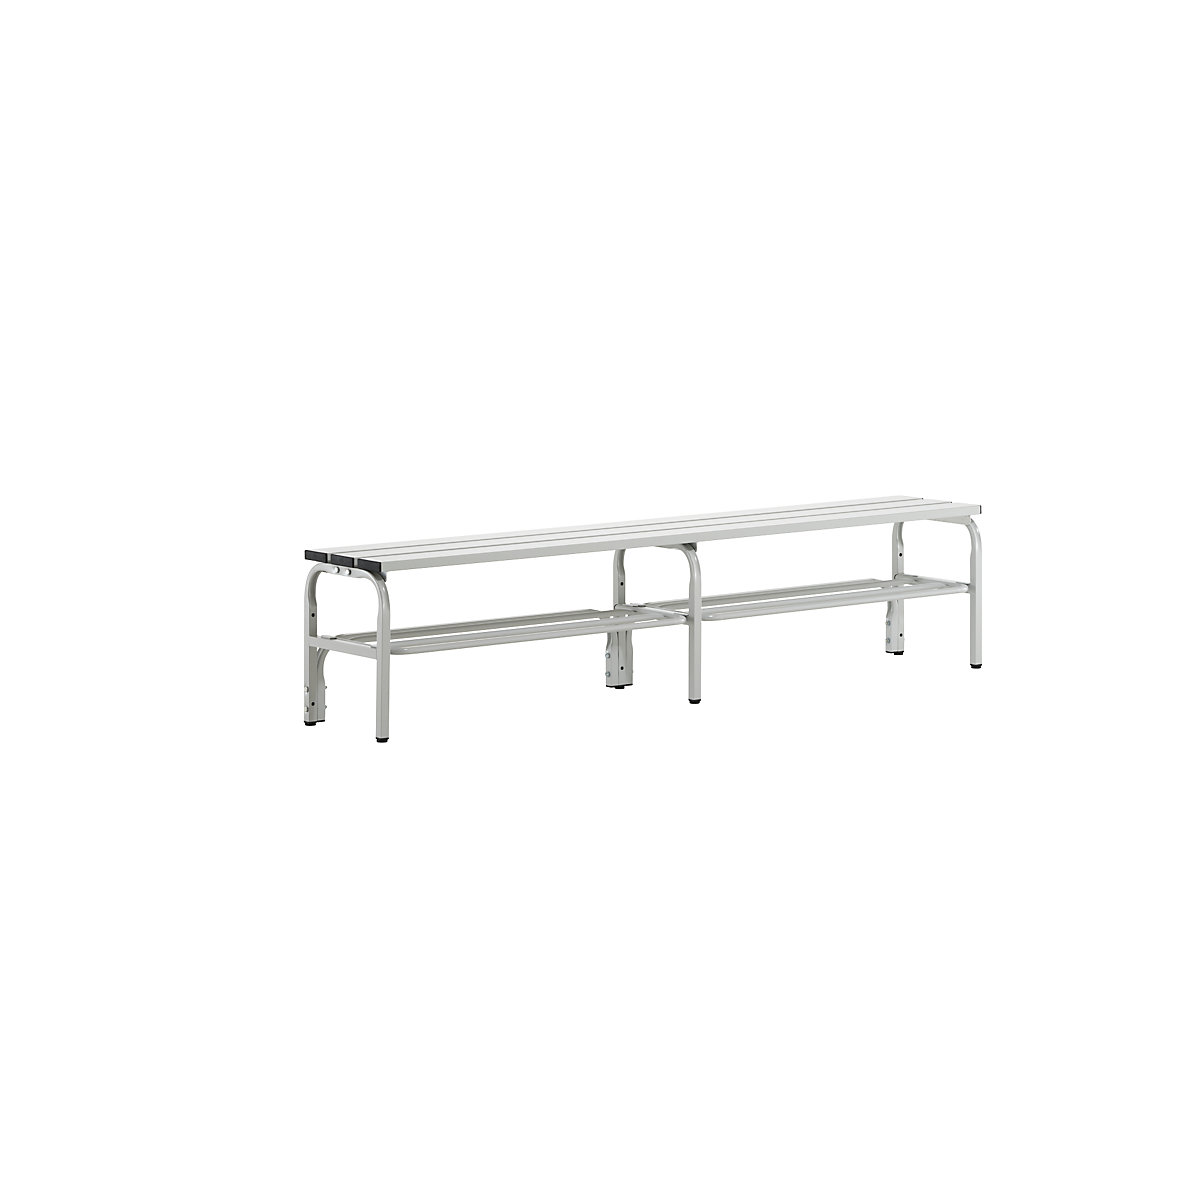 Changing room bench with aluminium slats – Sypro, HxD 450 x 350 mm, length 1500 mm, light grey, shoe rack-2